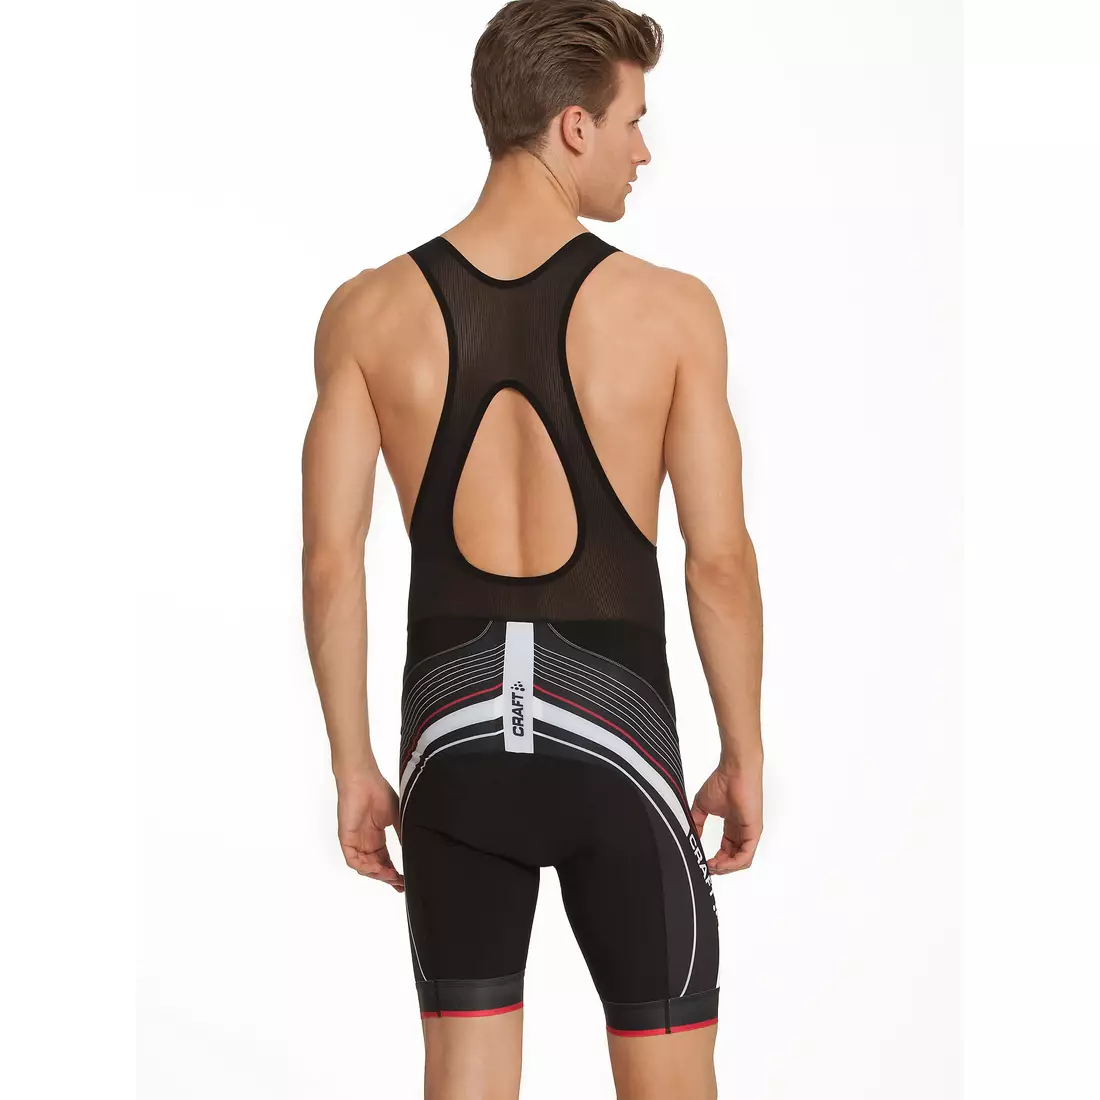 CRAFT Performance Bike Grand Tour men's cycling shorts 1902616-9430